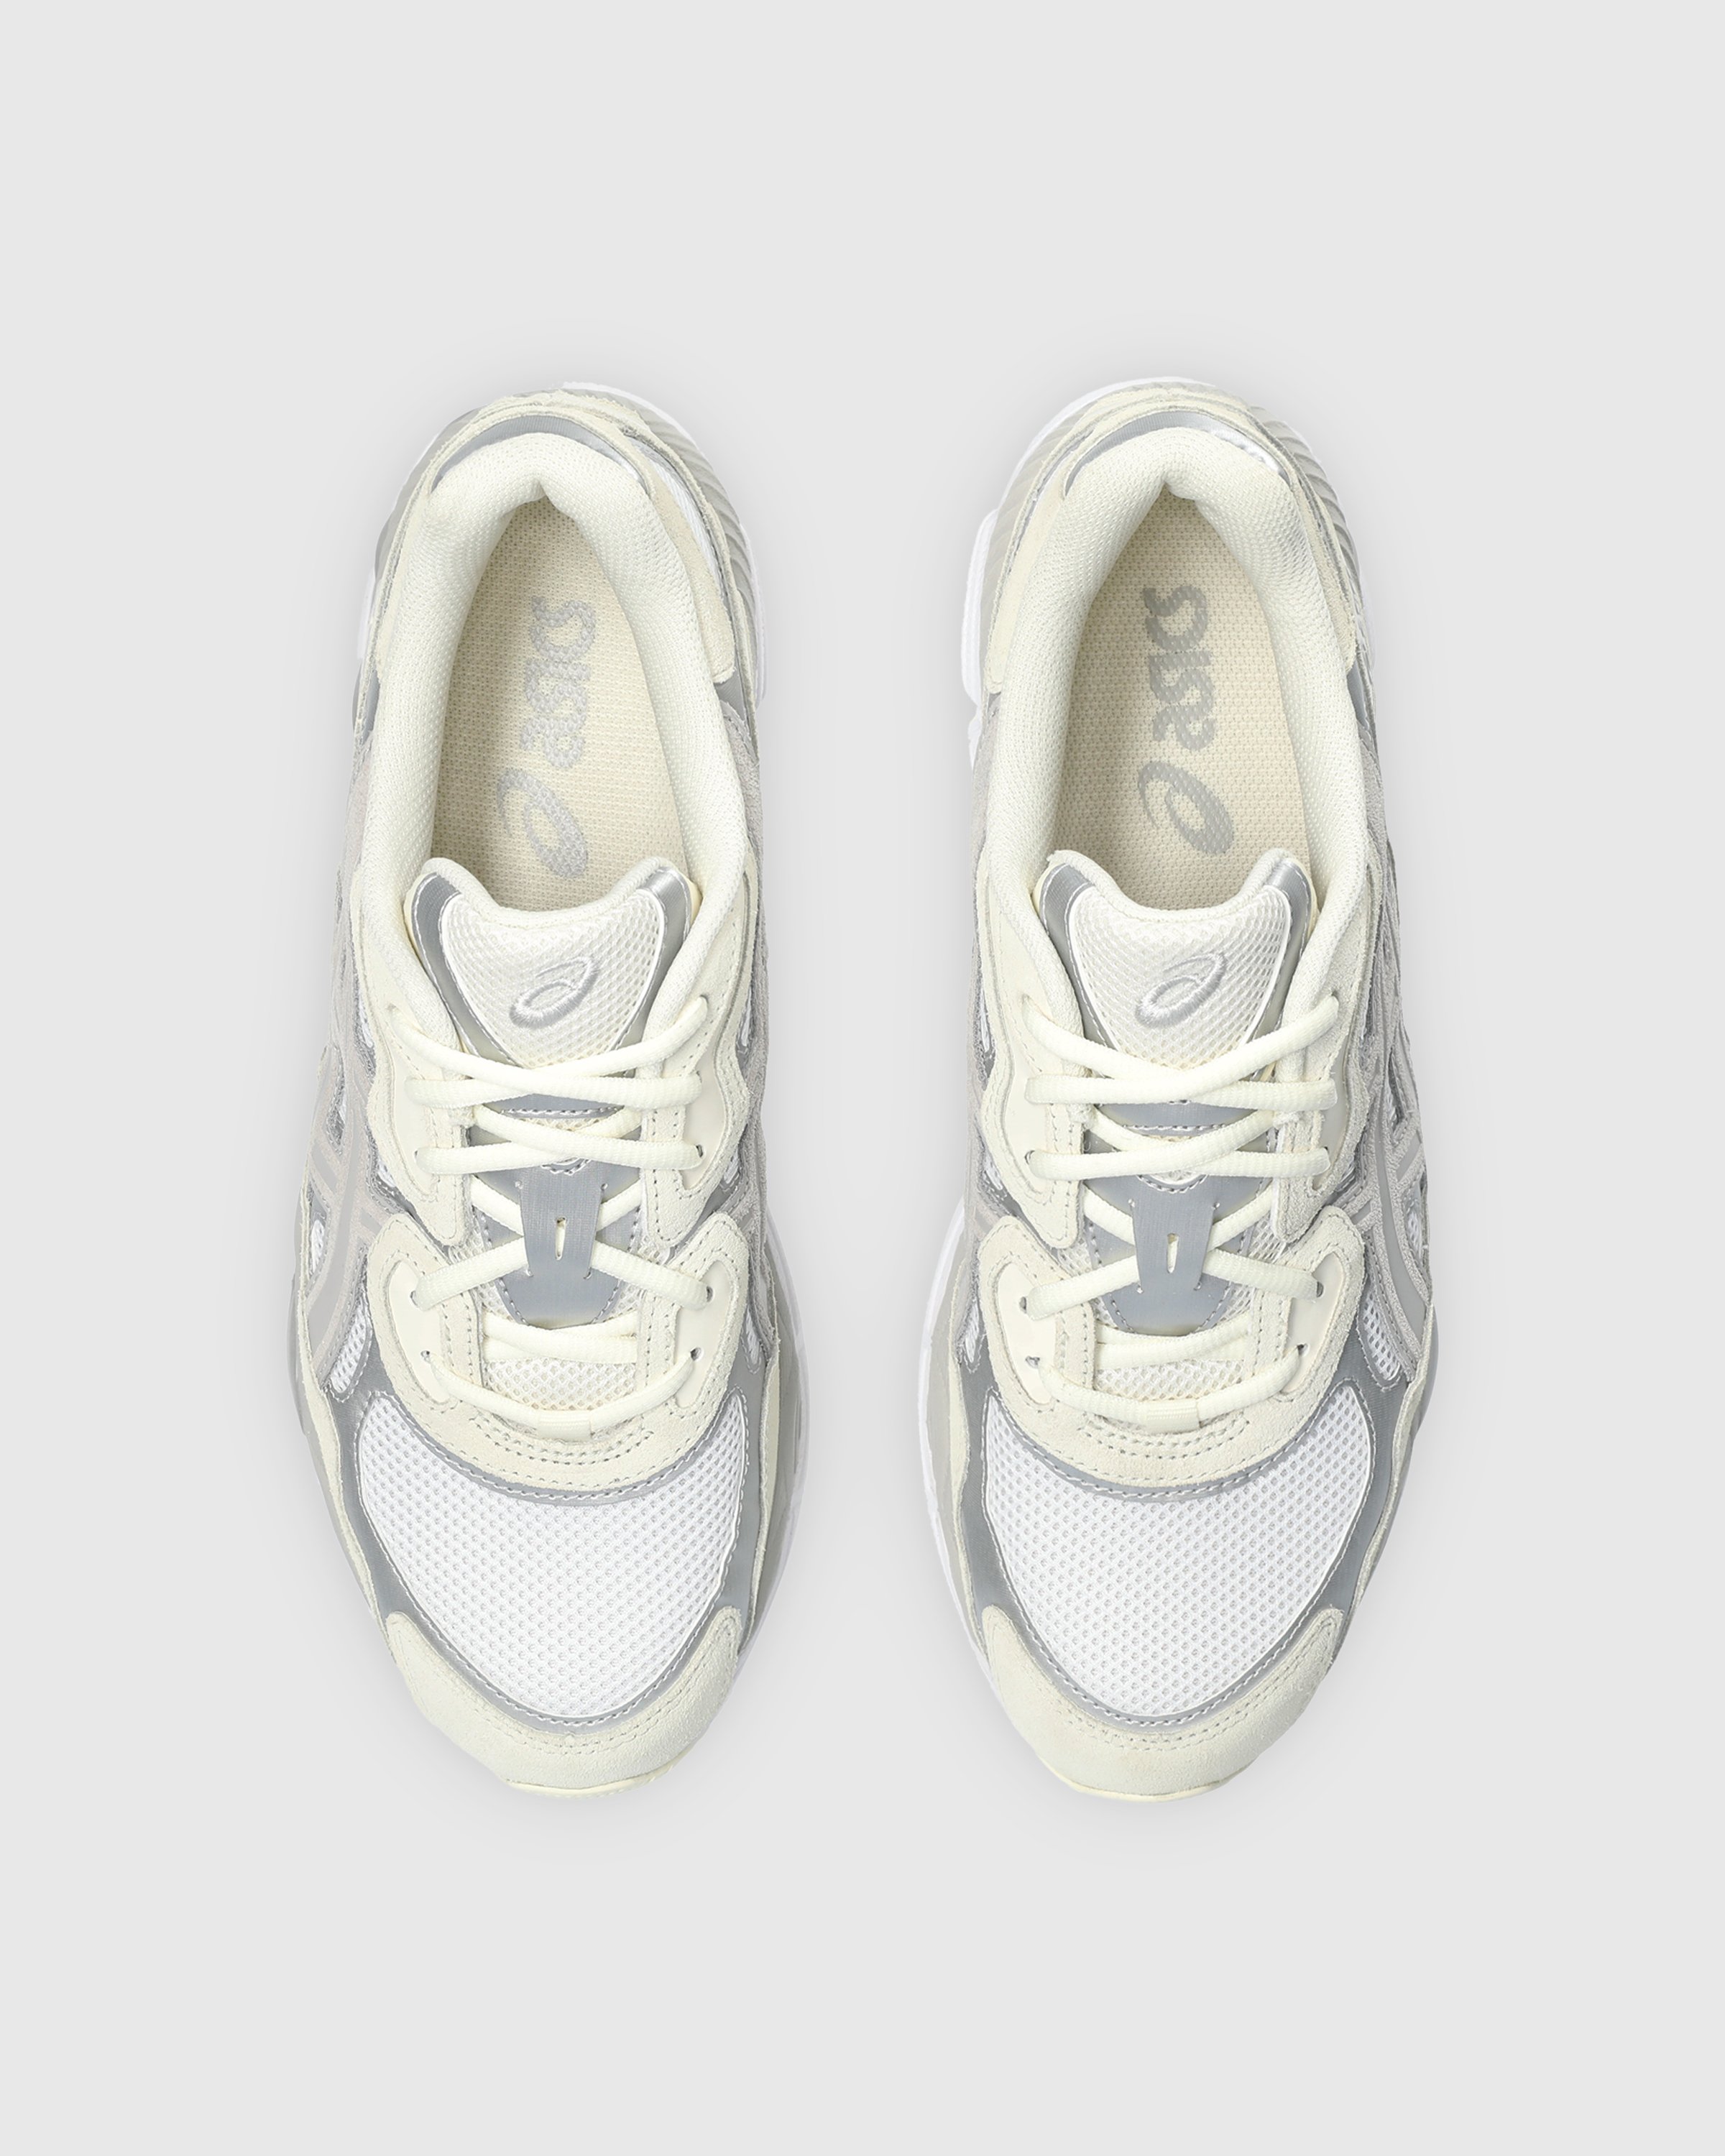 asics - GEL-NYC White/Oyster Grey - Footwear - Multi - Image 5